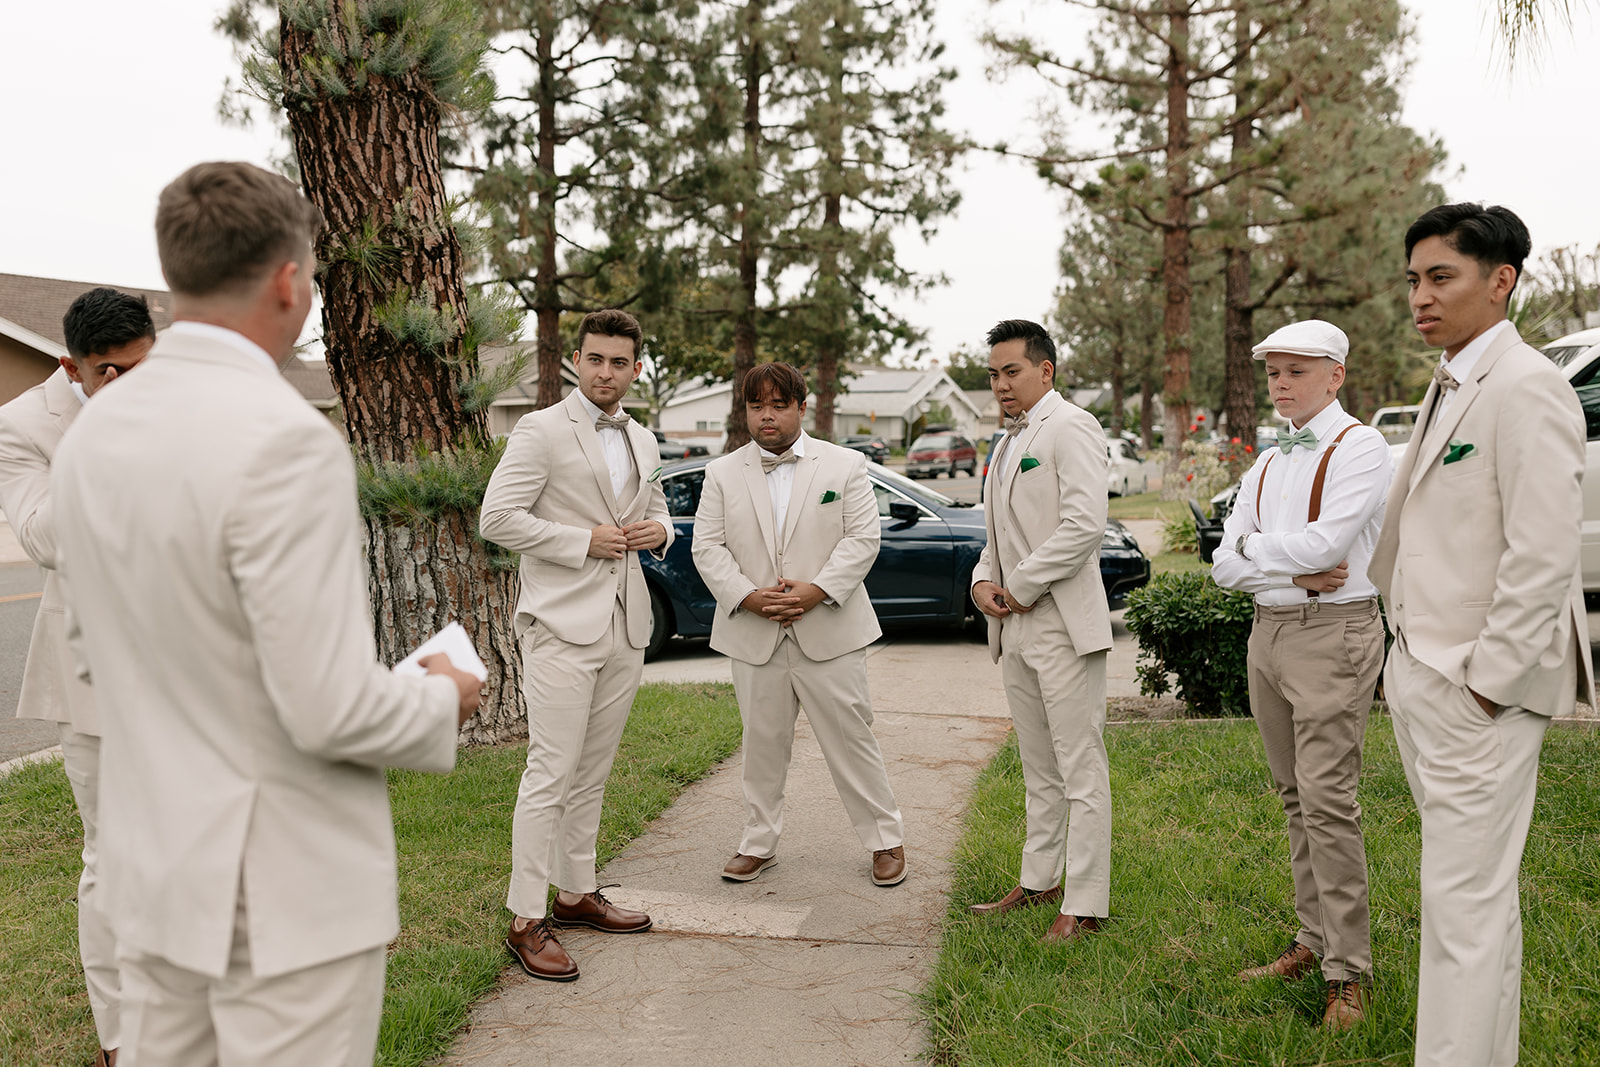 womens club wedding southern california laguna beach socal groomsmen attire groomsmen outfit groom getting ready pics